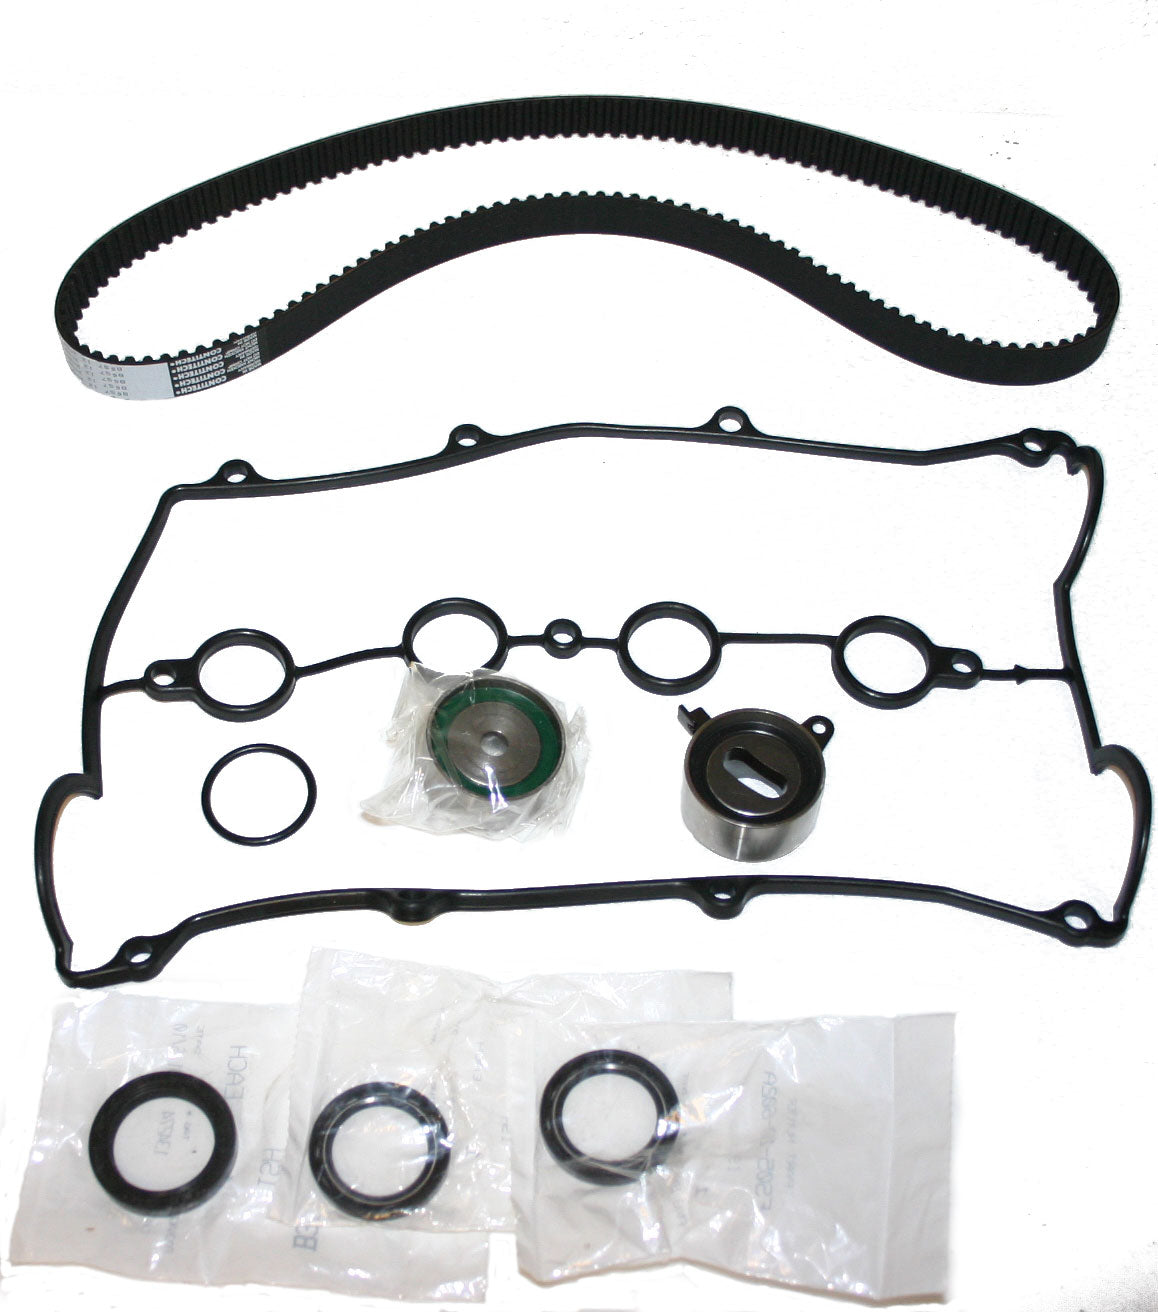 Timing belt kit (NB 2001-05 VVT engine)